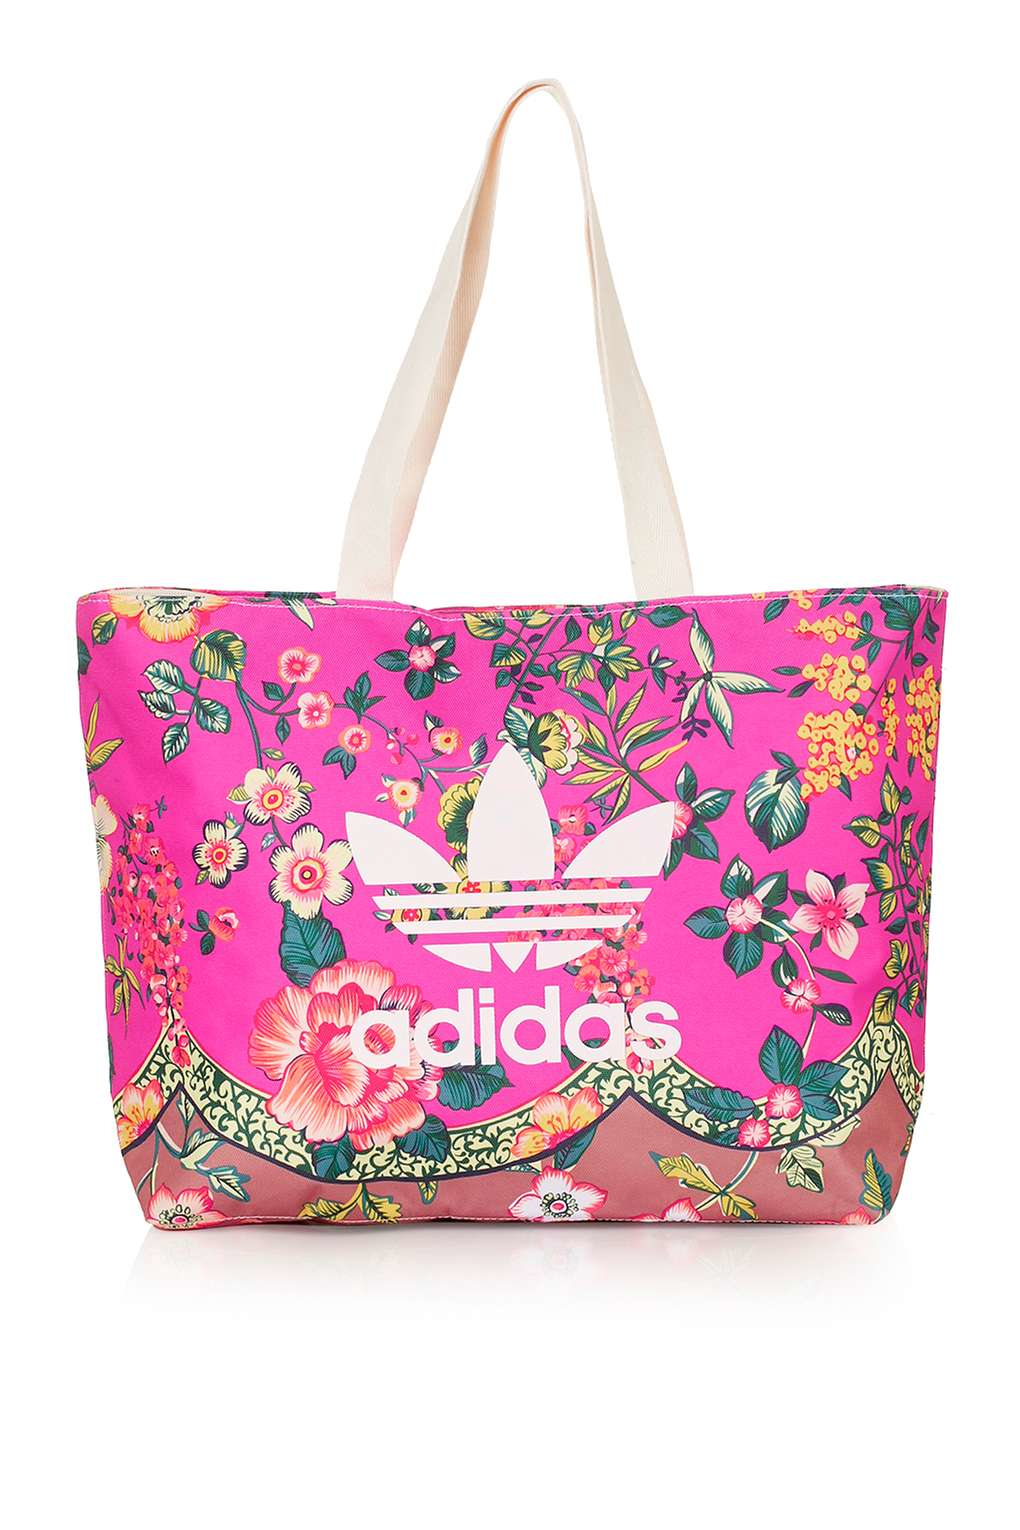 Topshop Floral Tote Bag By Adidas Originals in Pink (MULTI) | Lyst